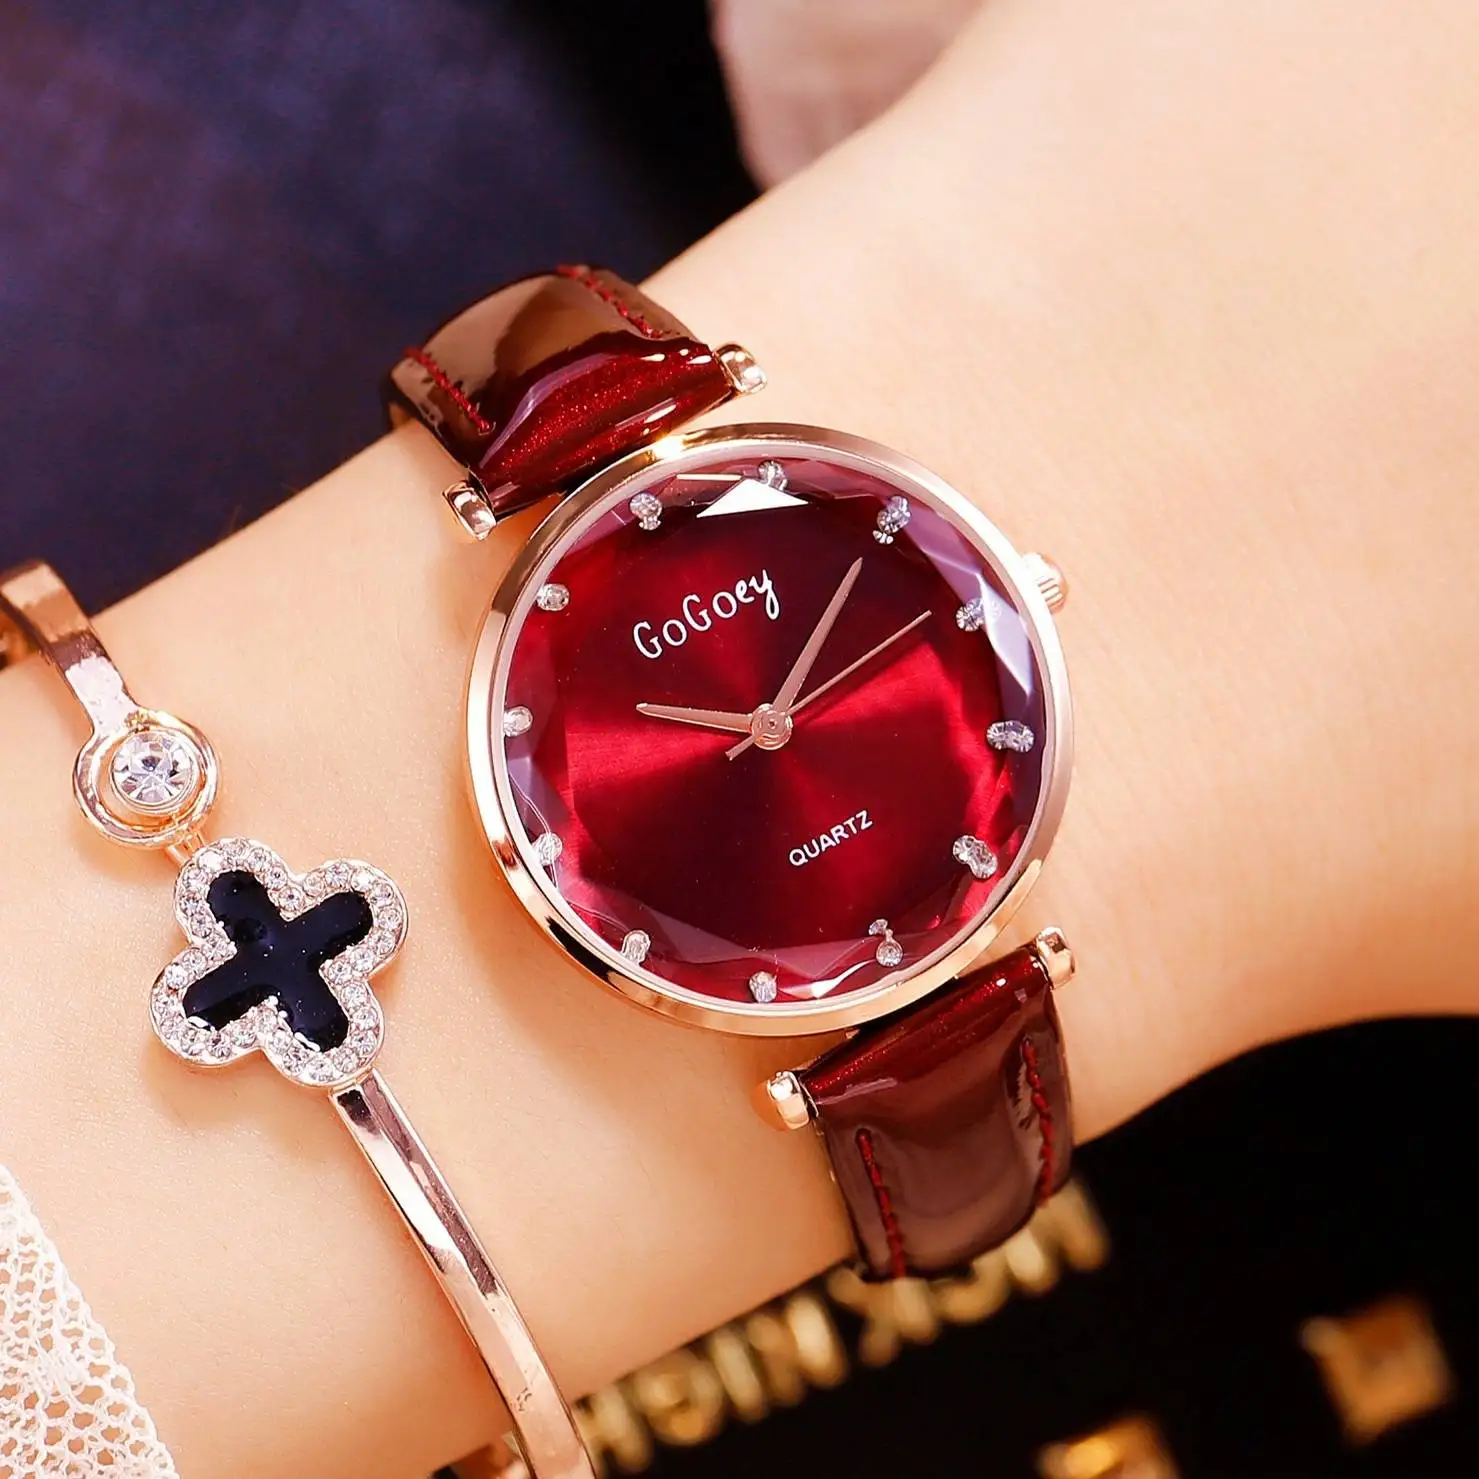 

Fashion Casual Women Watches Gogoey Leather Strap Quartz Watch Luxury Crystal Women Dress Wristwatches Female Clock Reloj Mujer